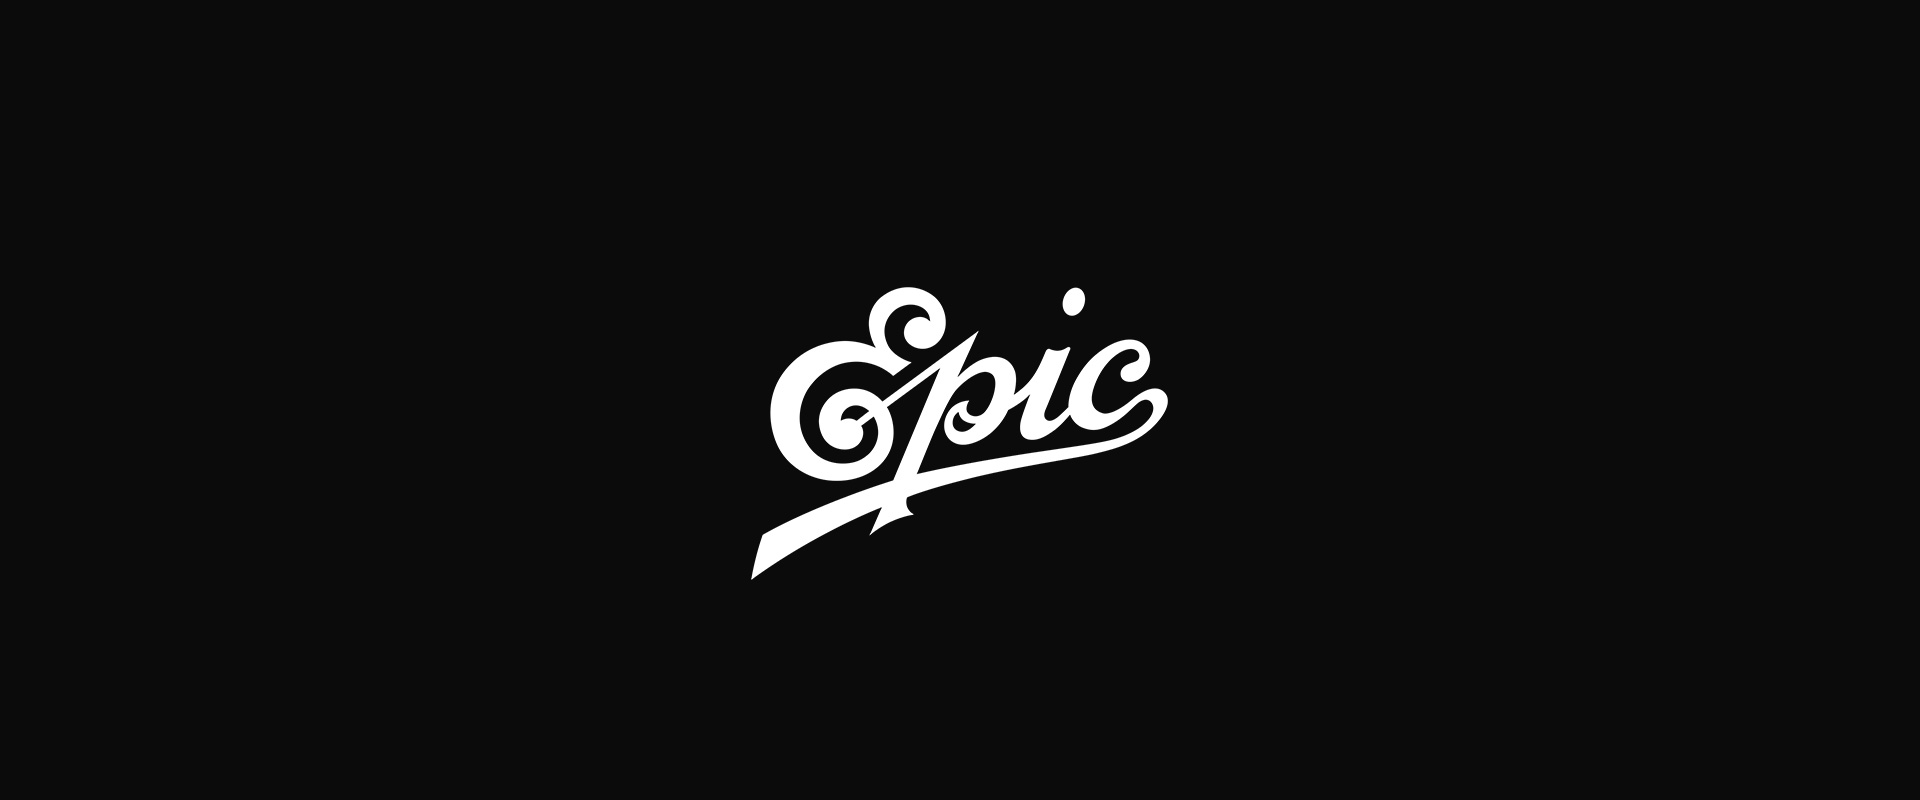 Epic Records | Visual Natives1920 x 800